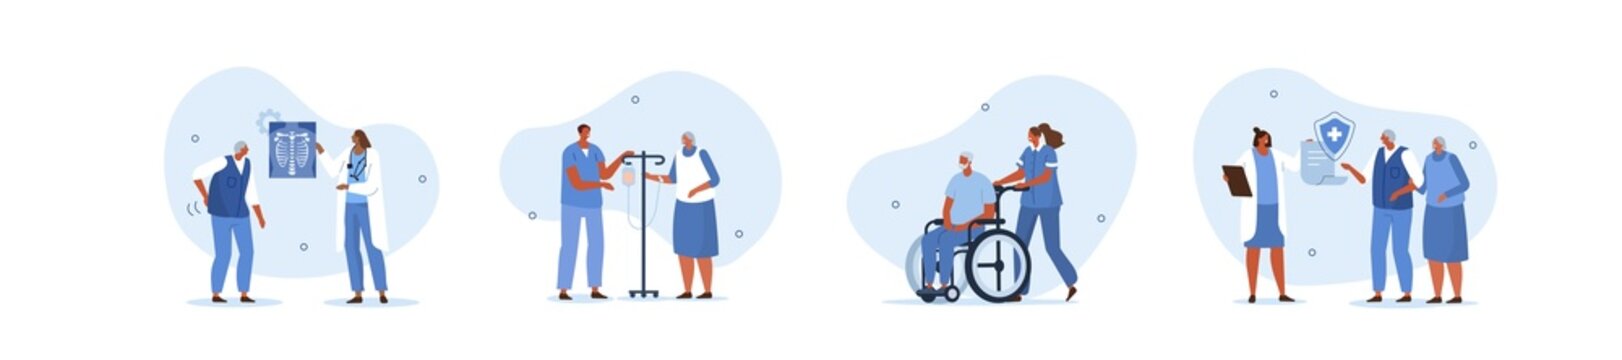 Elderly healthcare illustration set. Seniors in nursing home hospital meeting with doctor, having consultation and care from nurse. Geriatric medicine concept. Vector illustration.